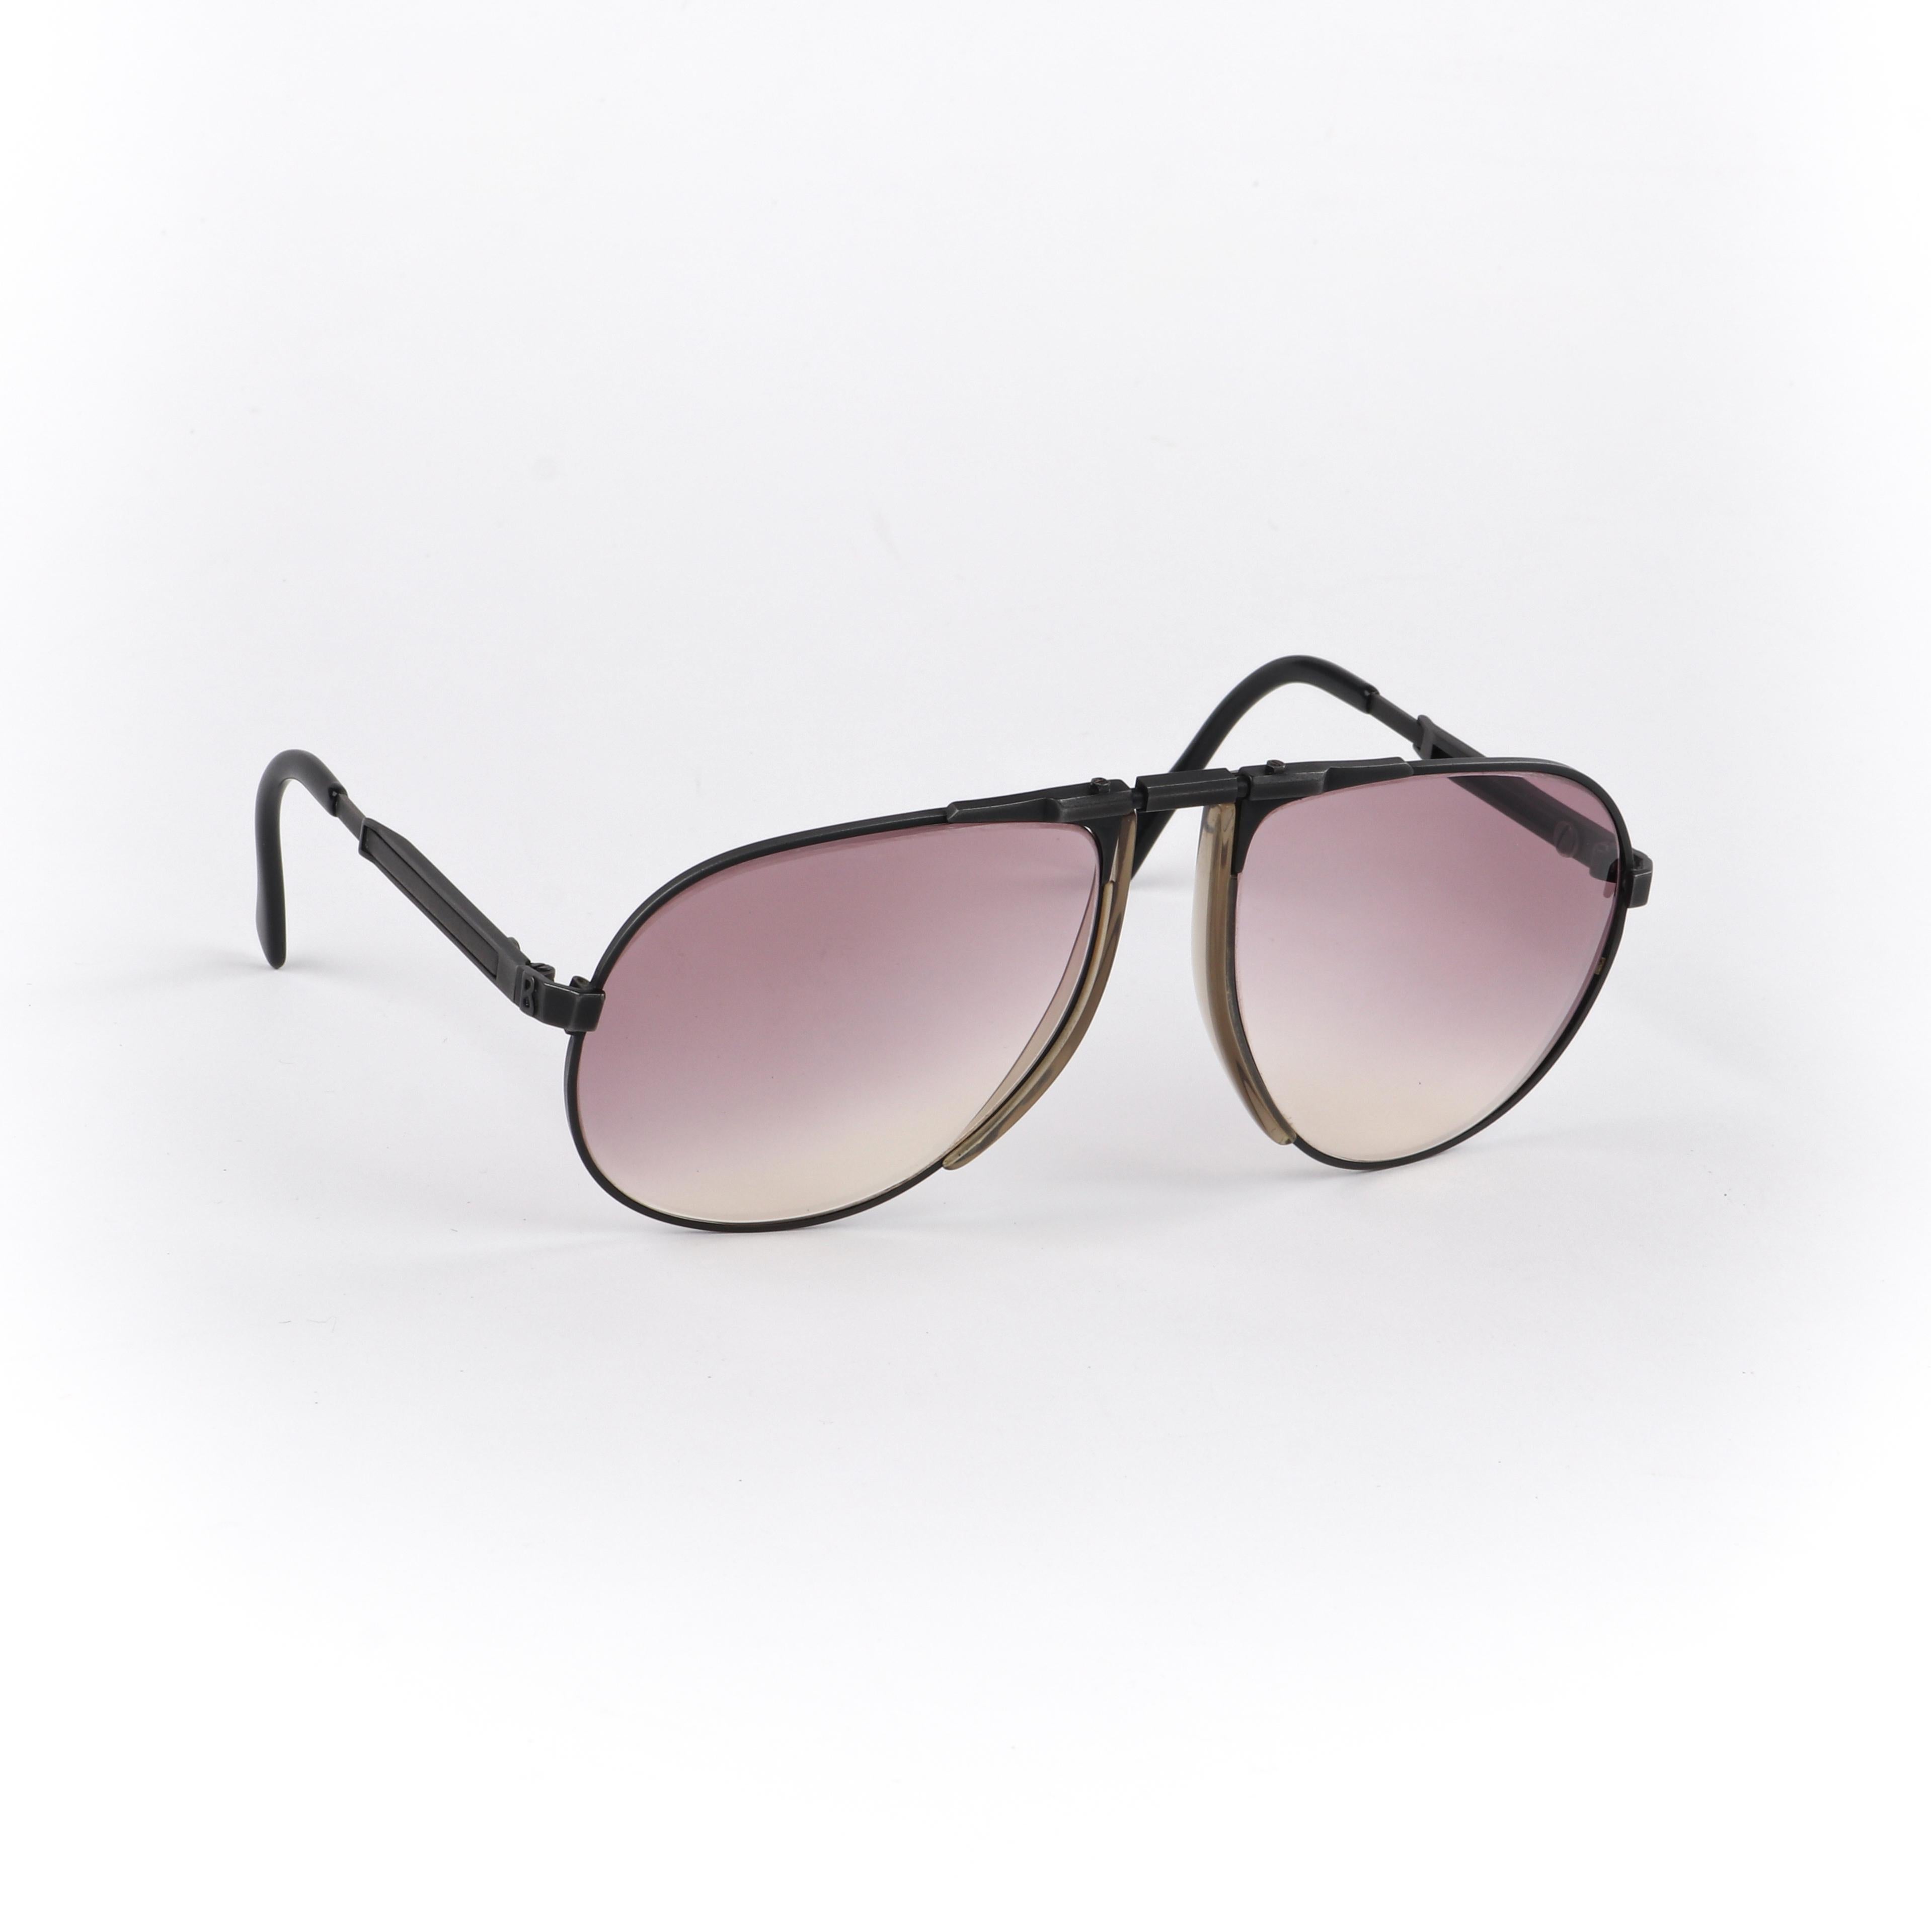 BOGNER c.1980’s Purple Tinted Adjustable 7001 Eschenbach Aviator Ski Sunglasses
 
Brand/Manufacturer: Bogner
Circa: 1980’s
Designer: 
Style: Aviator sunglasses
Color(s): Frame: black; lenses: purple
Lined: No
Unmarked Fabric Content (feel of):